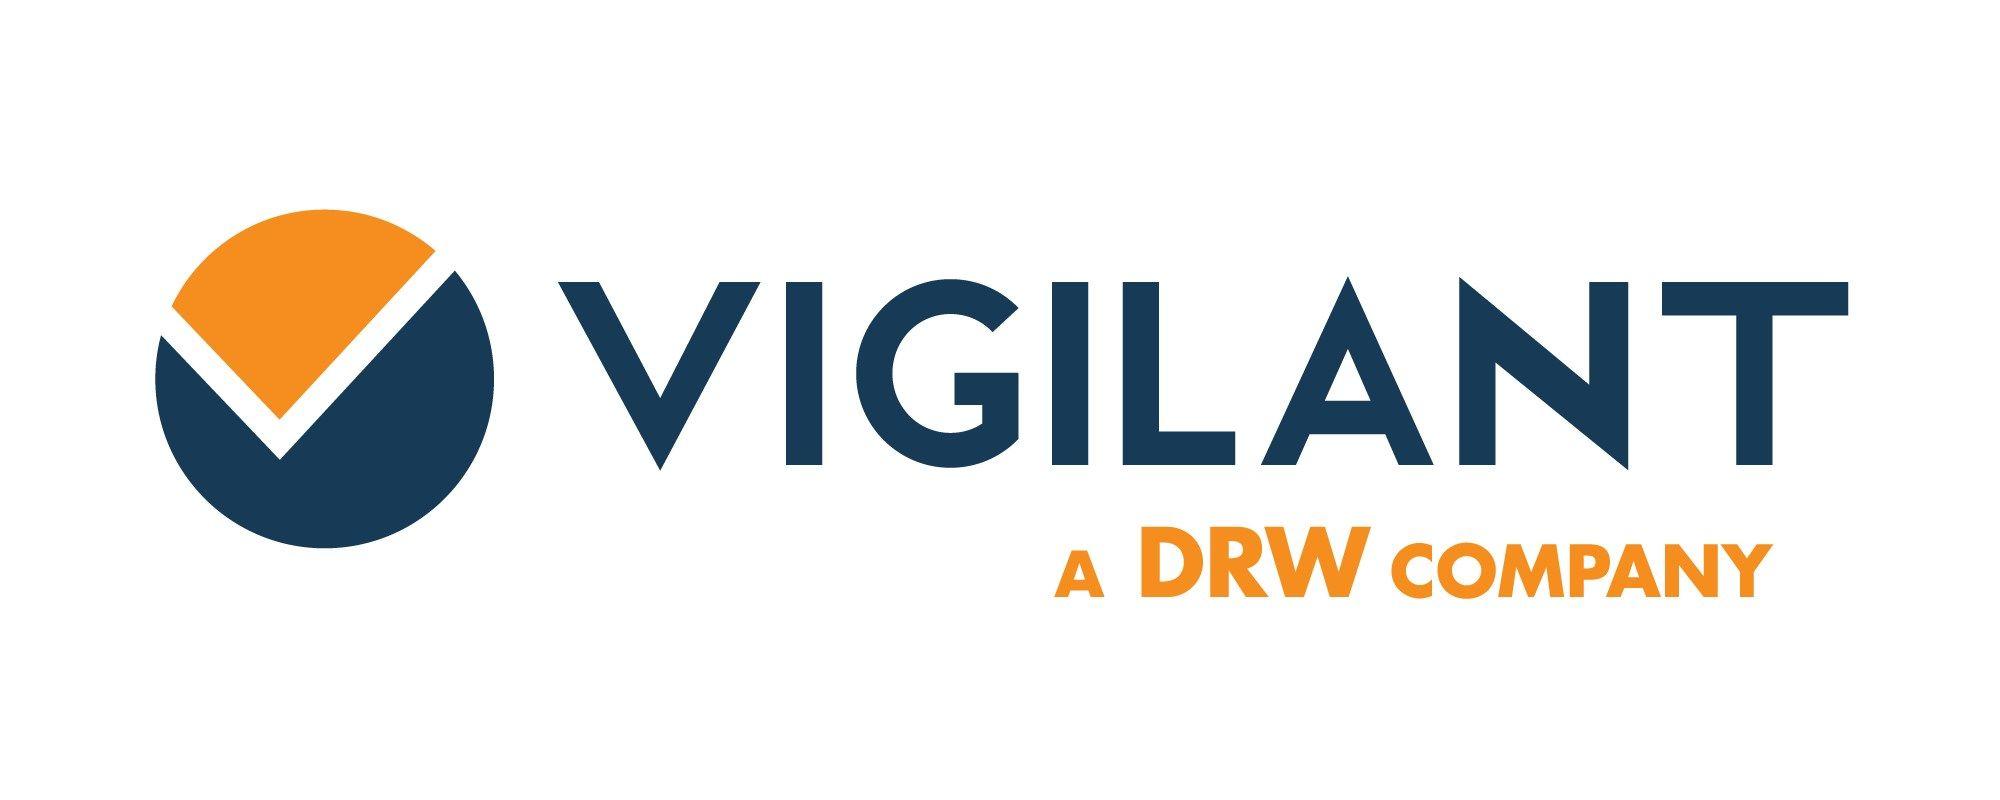 Vigilant Logo - Vigilant Named One of Canada's Best Small & Medium Employers